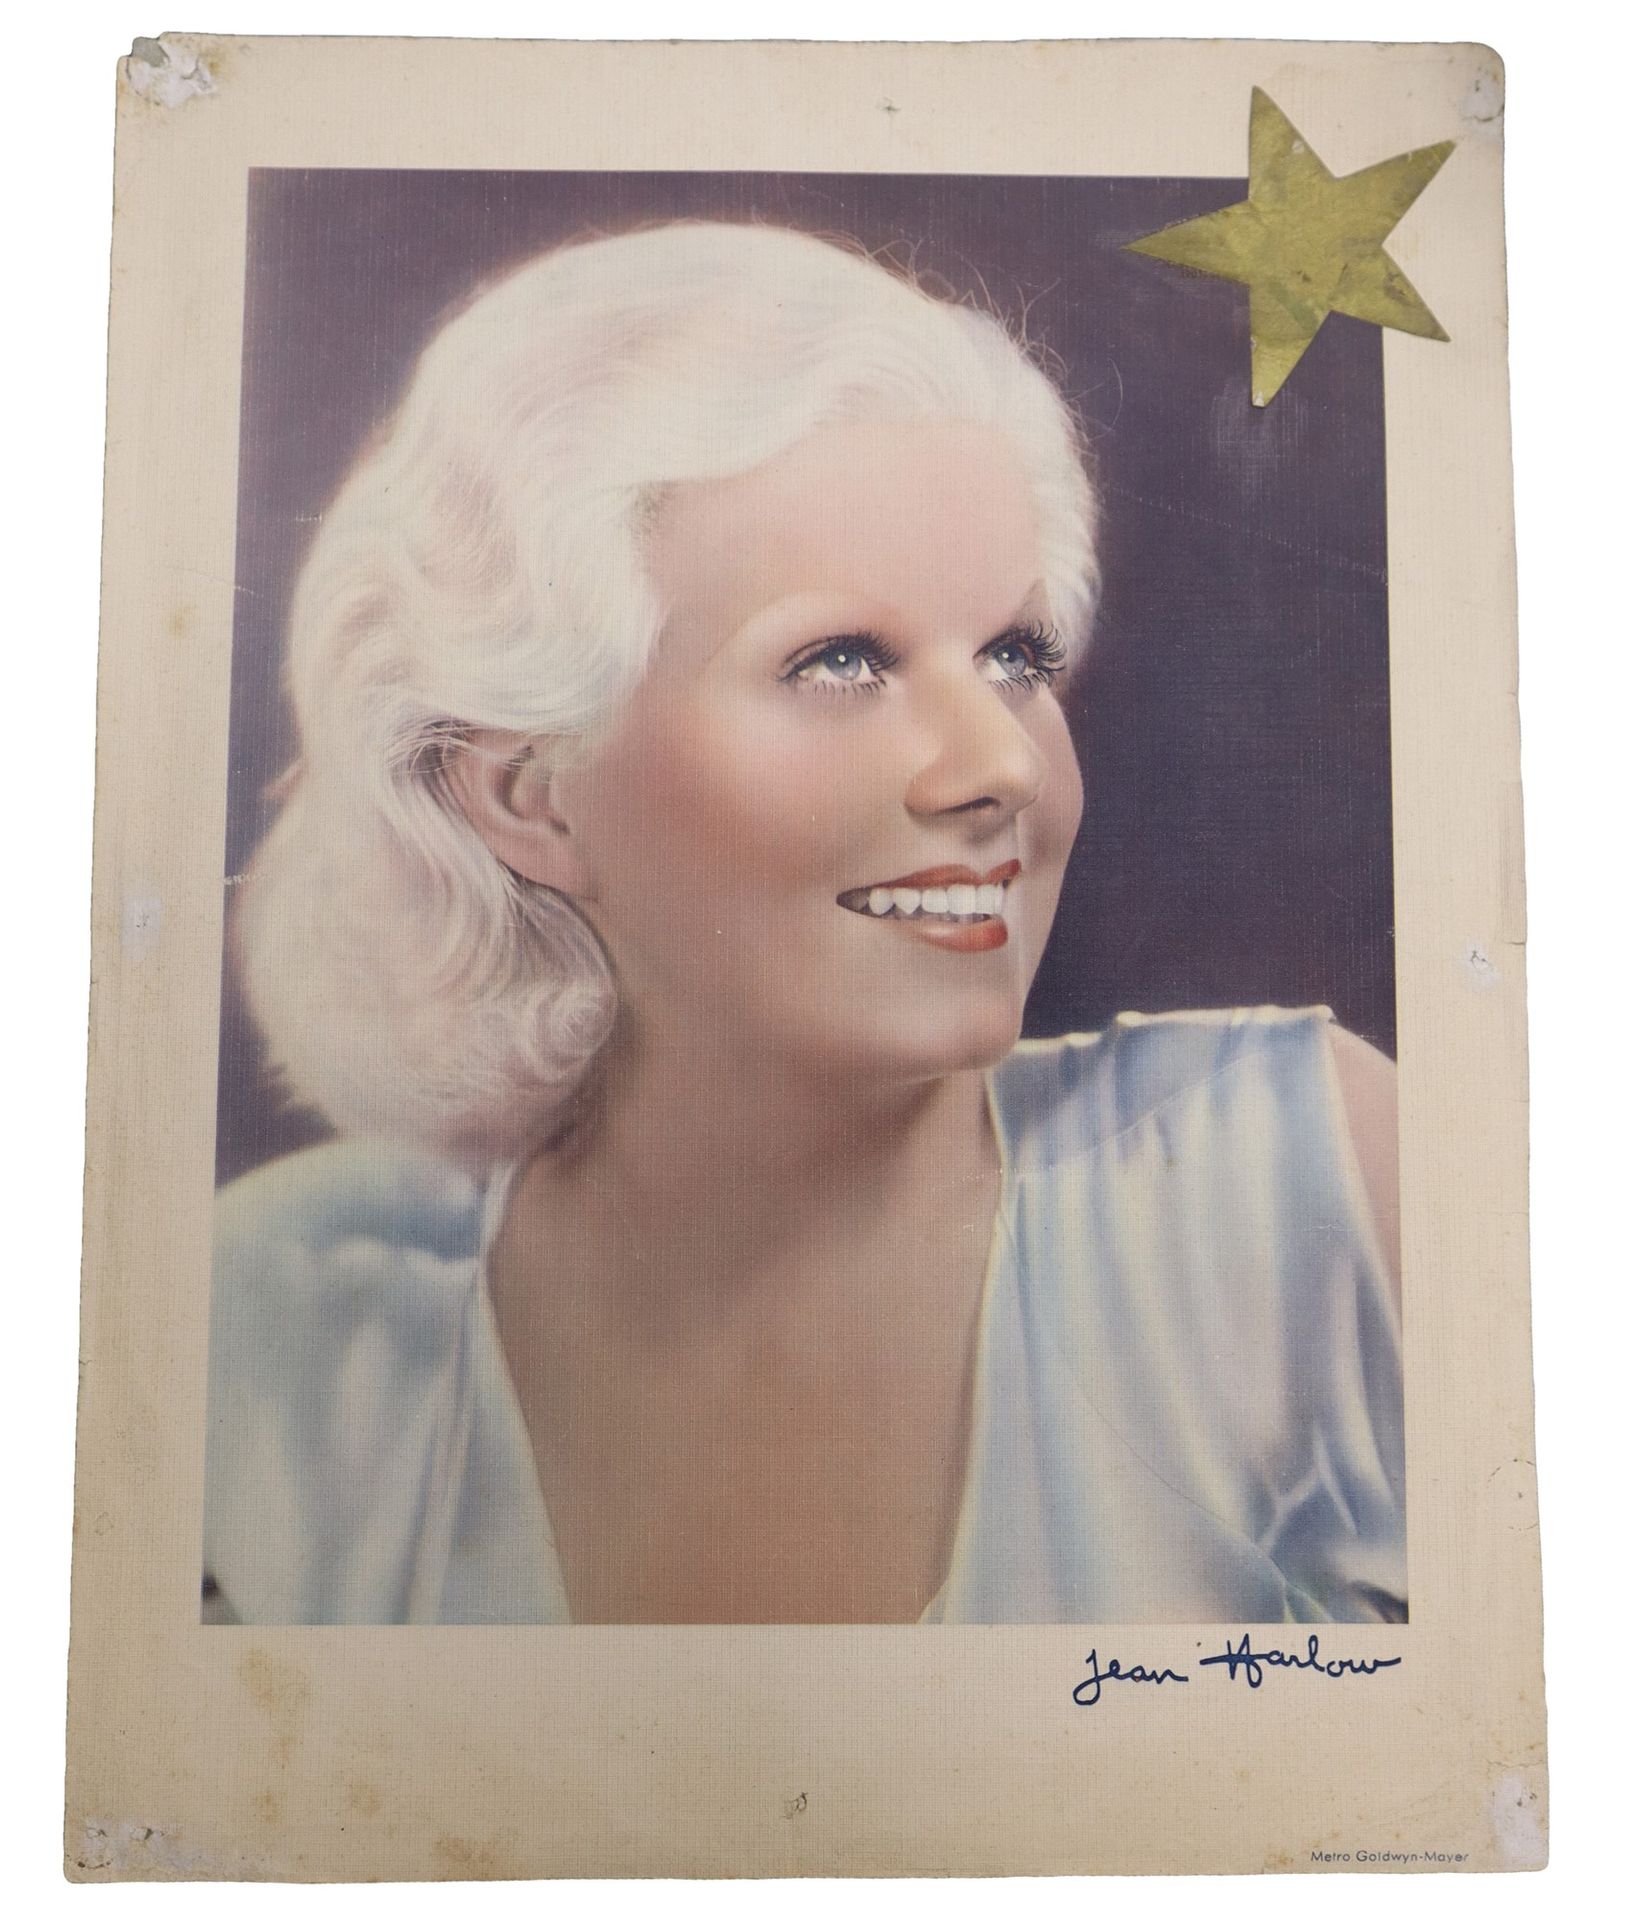 Null 静态照片 Jean Arthur , 1930年代 30 cm x 24 cm 哥伦比亚胶片